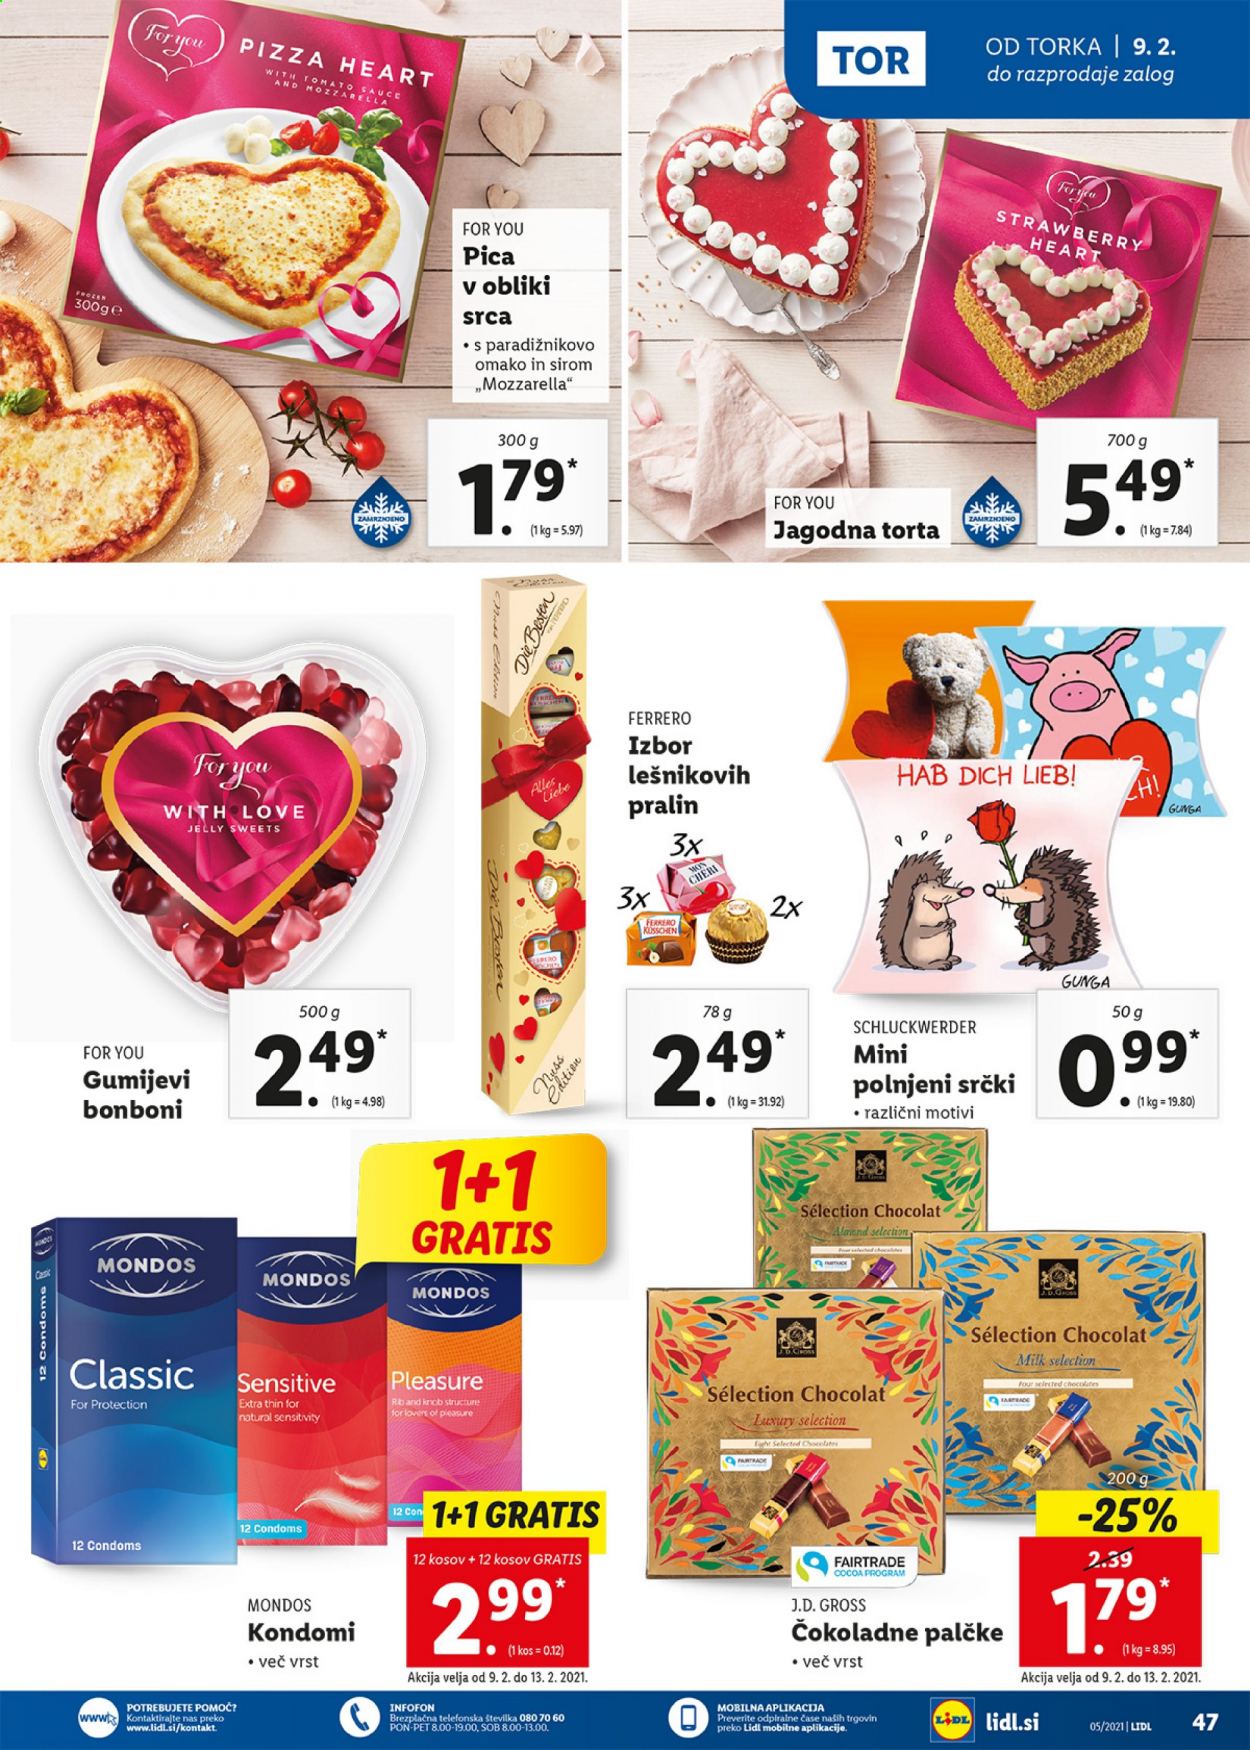 thumbnail - Lidl katalog - 4.2.2021 - 14.2.2021 - Ponudba izdelkov - torta, pizza, bonboni, kondomi. Stran 47.